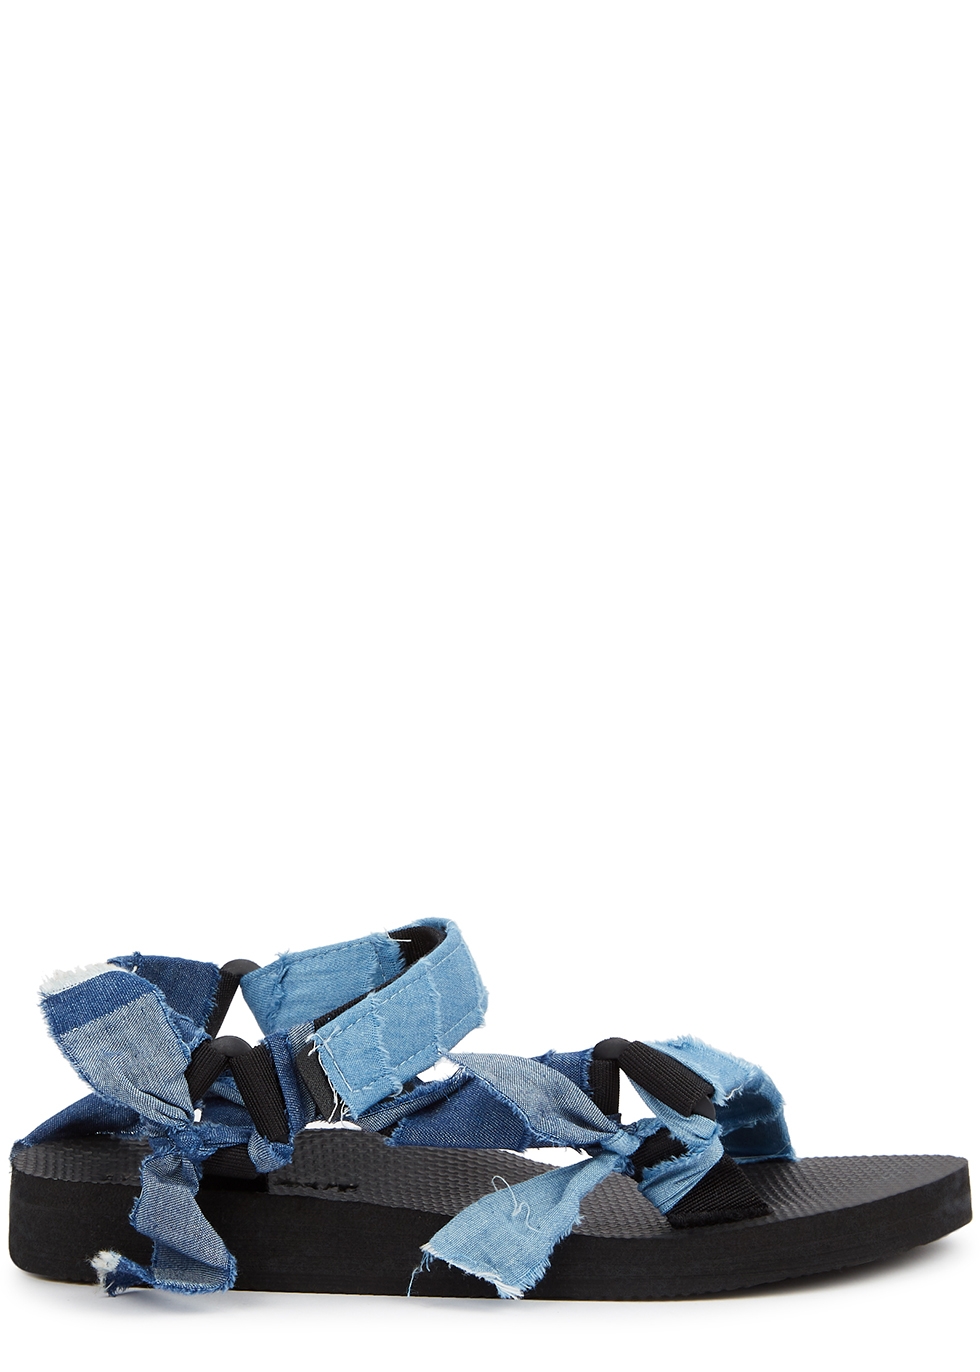 Arizona Love Trekky blue denim-trimmed sandals - Harvey Nichols